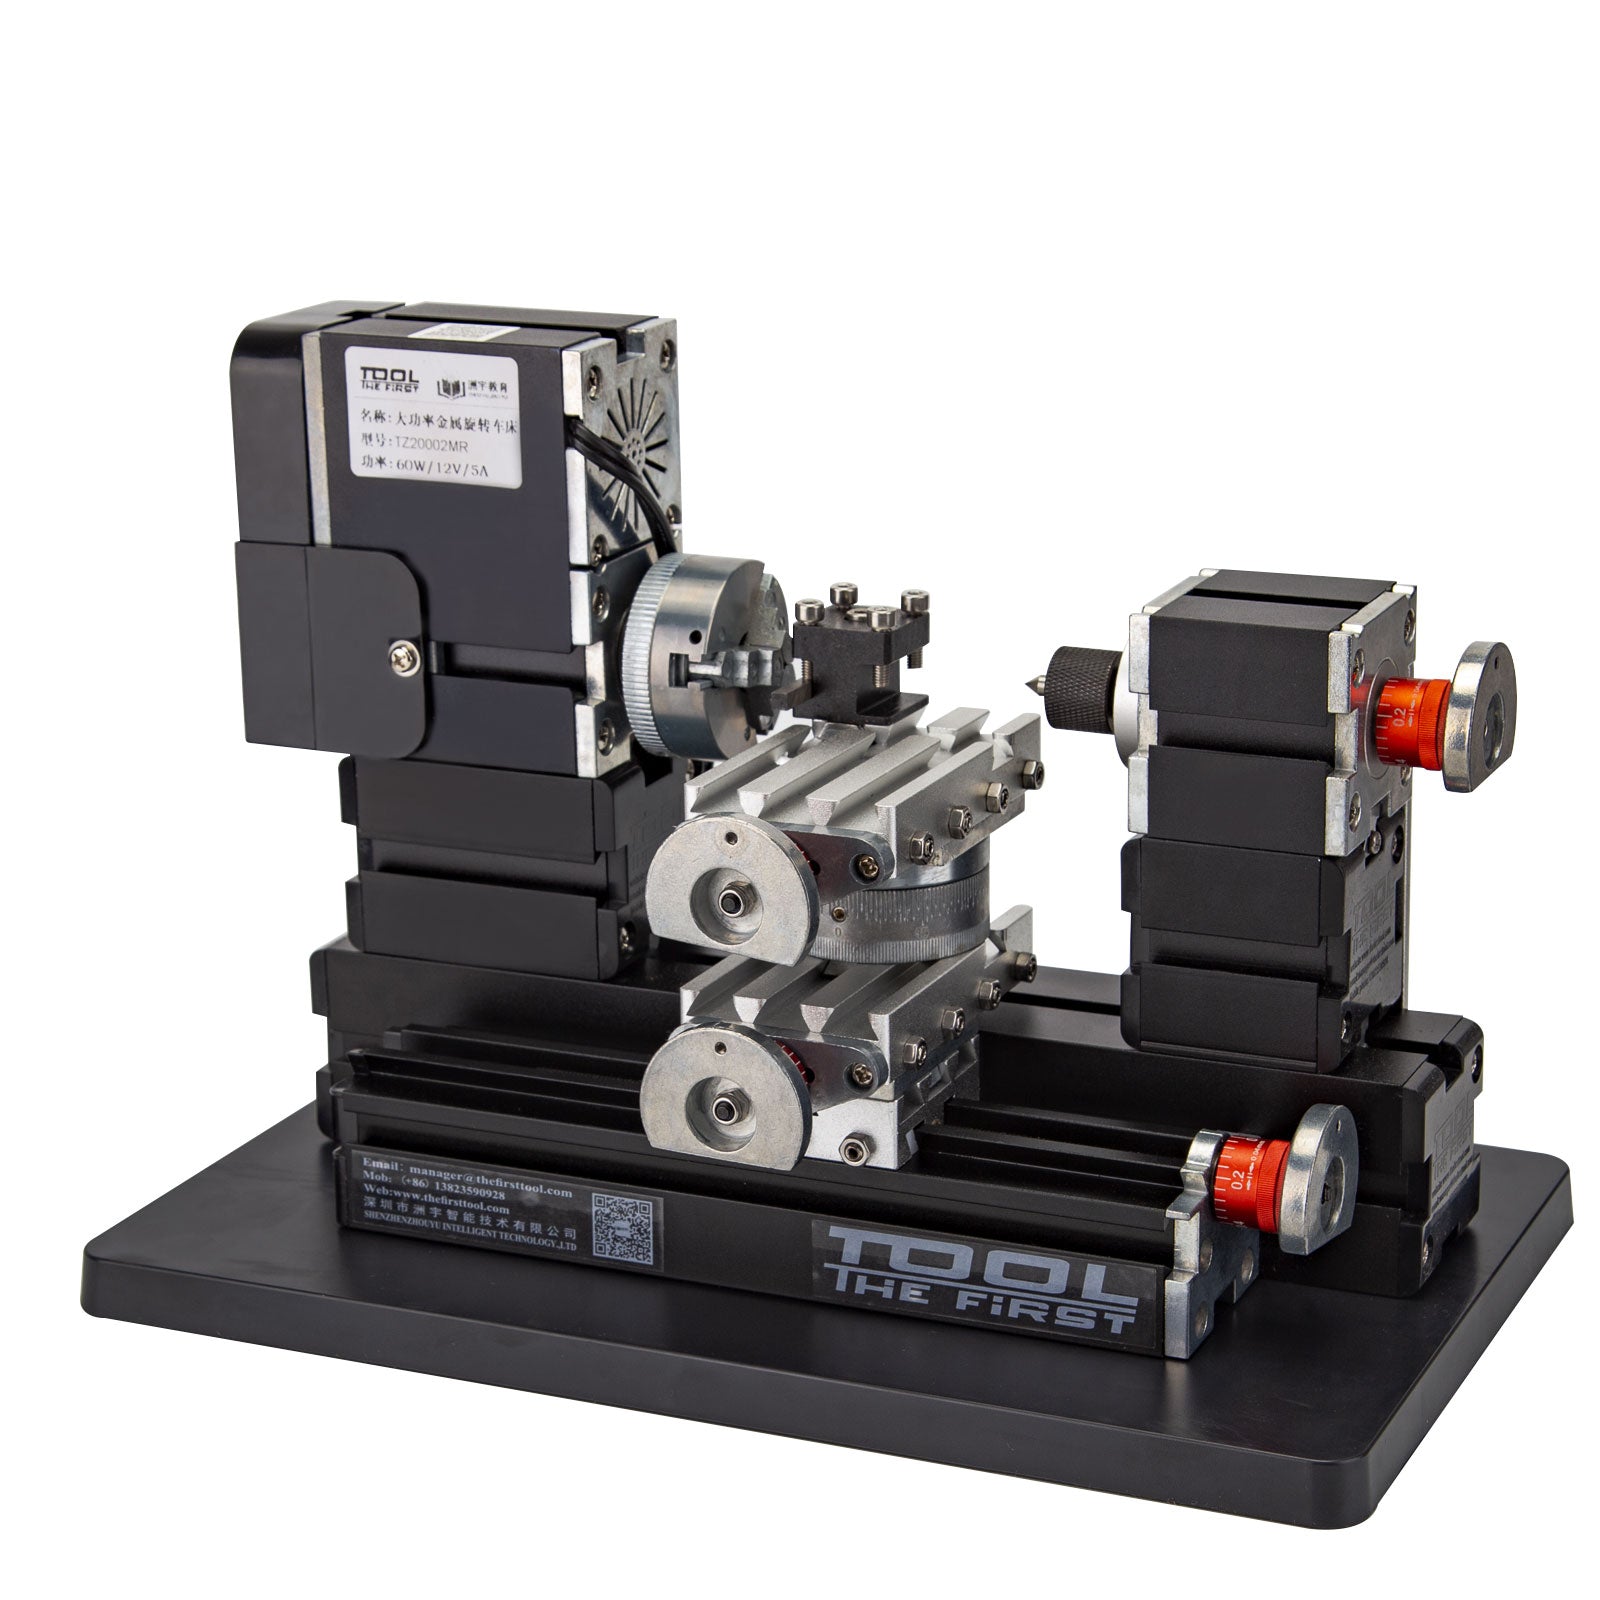 Metal Machining Tools Lathe Milling Machine 3D Metal Model Kits Assembly Model